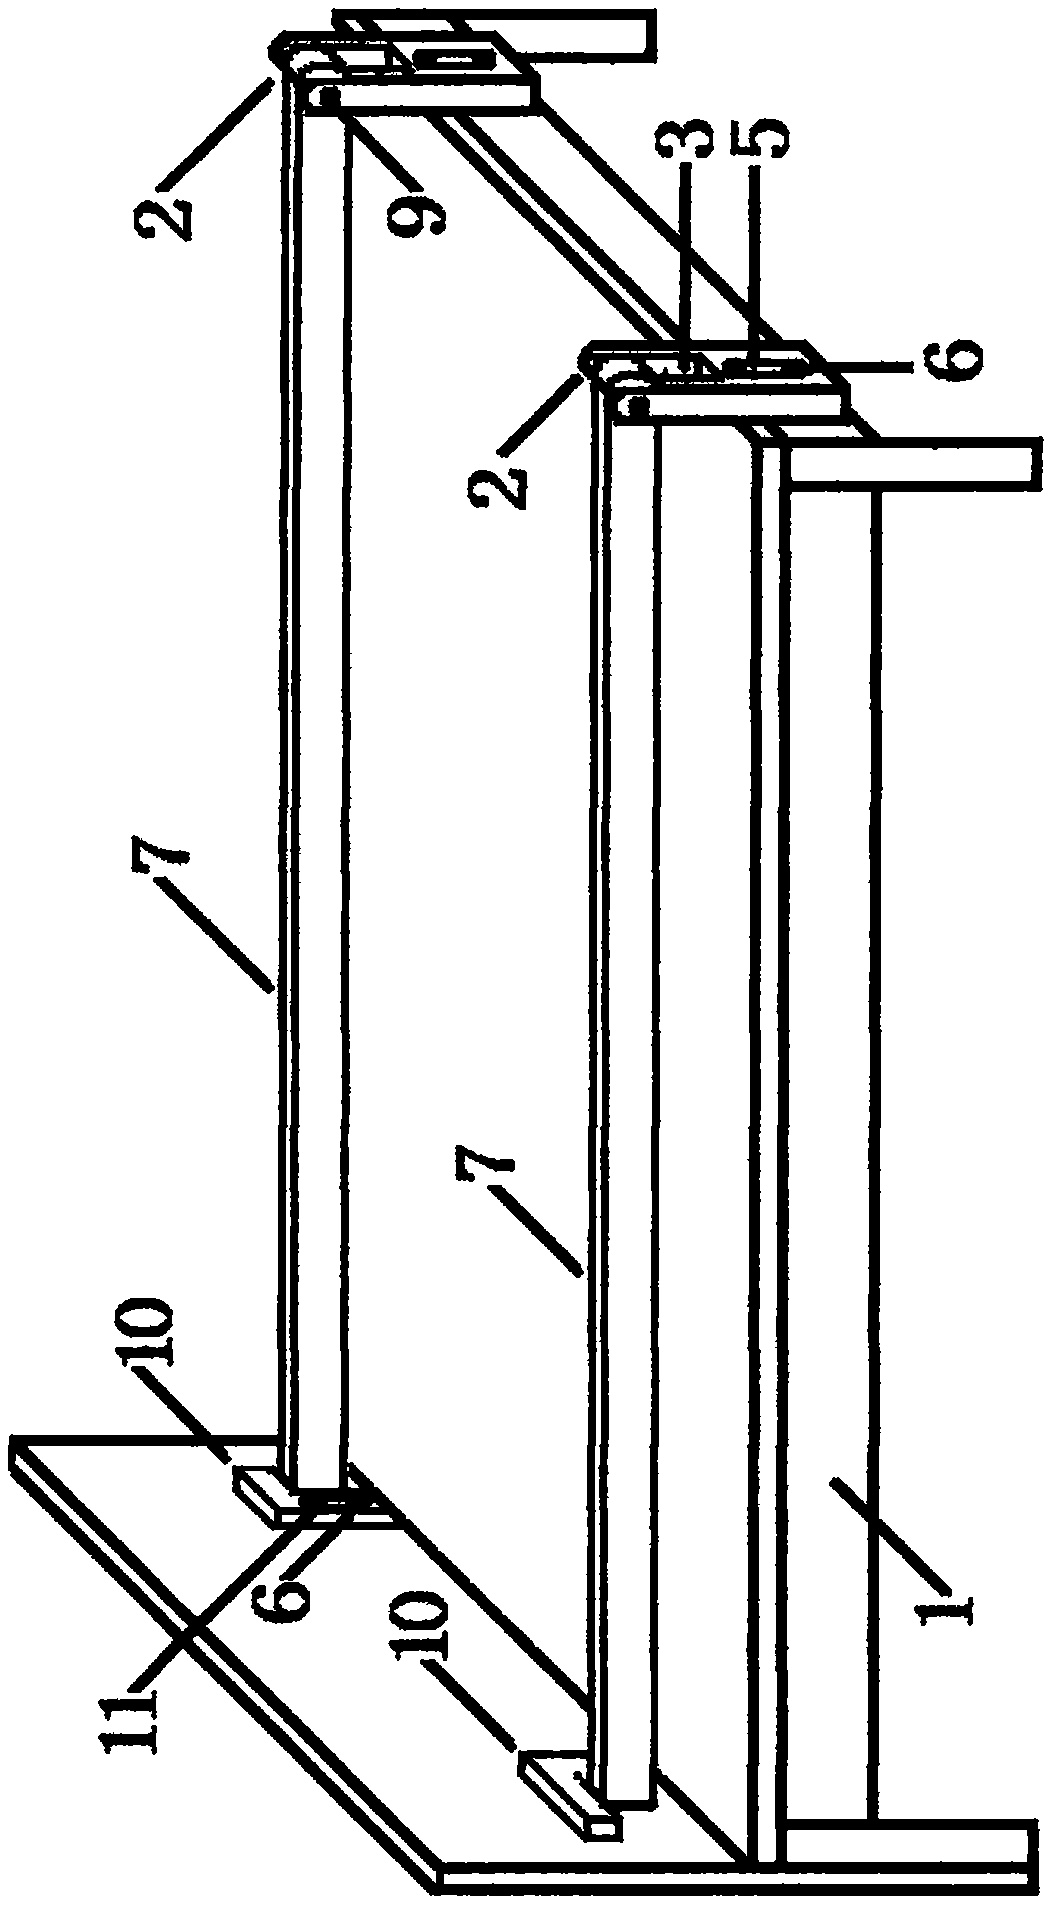 Crib pressing rod anti-quilt-kicking structure